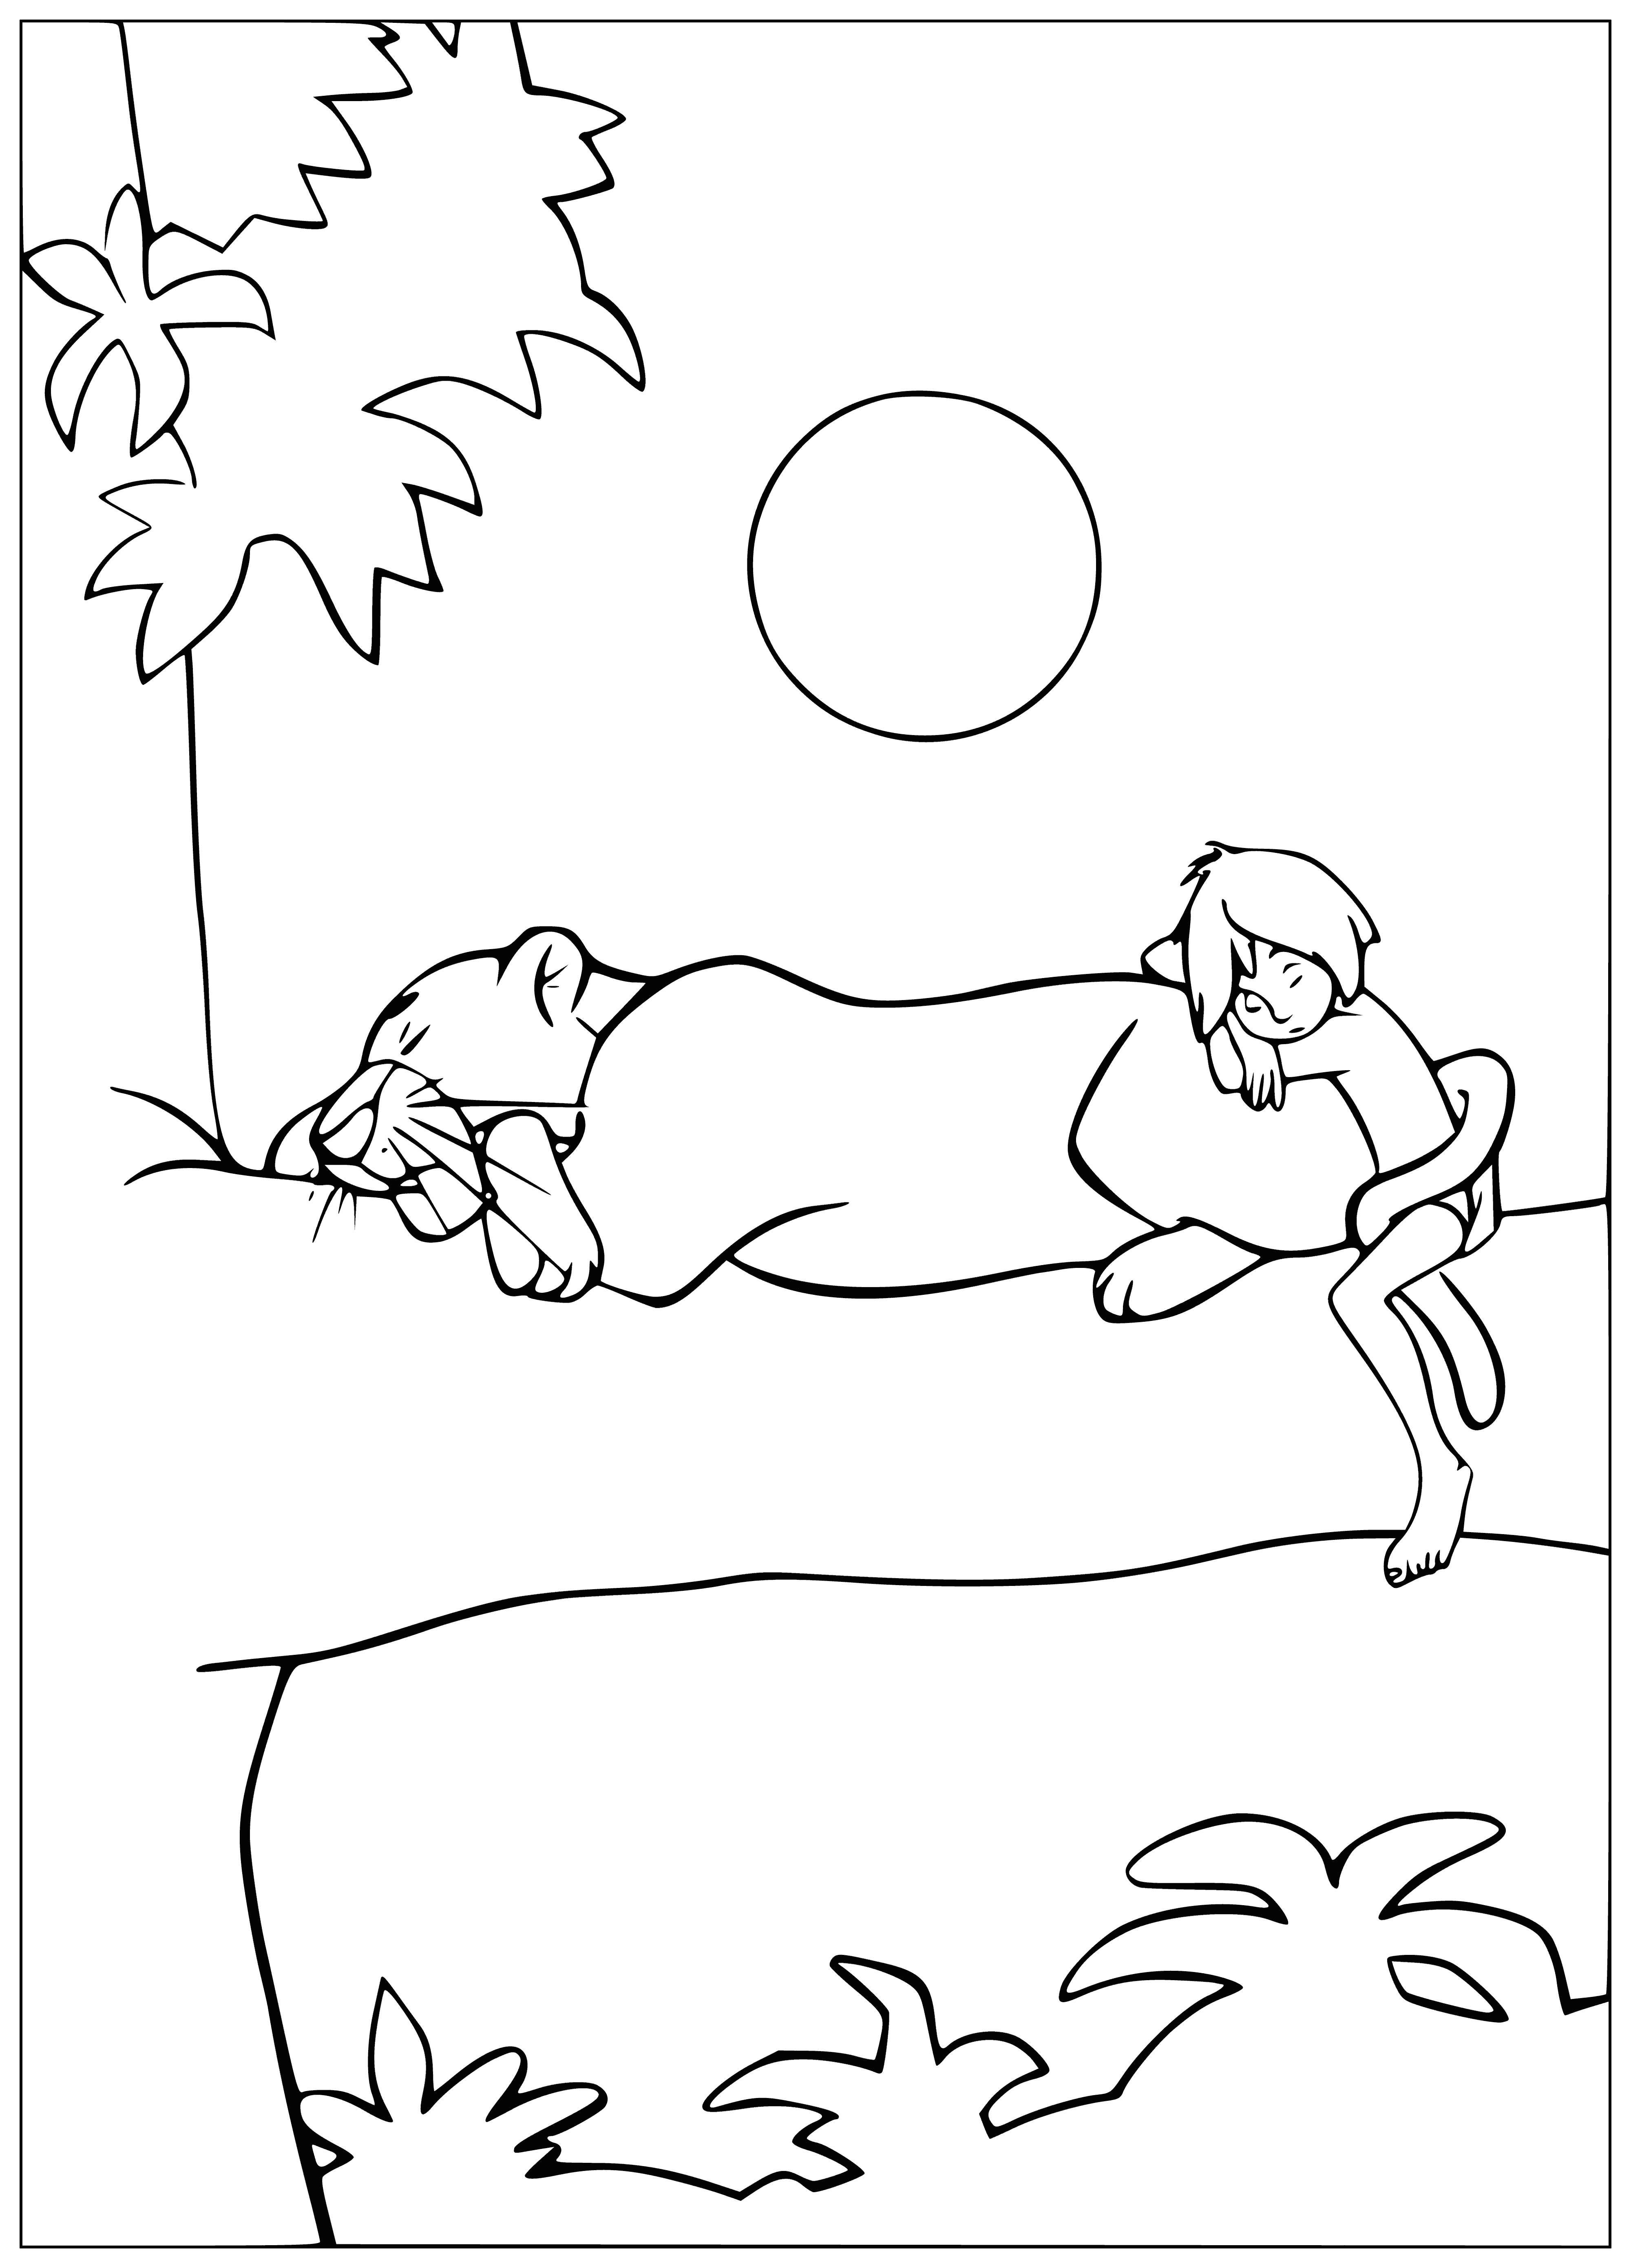 Bagira and Mowgli coloring page